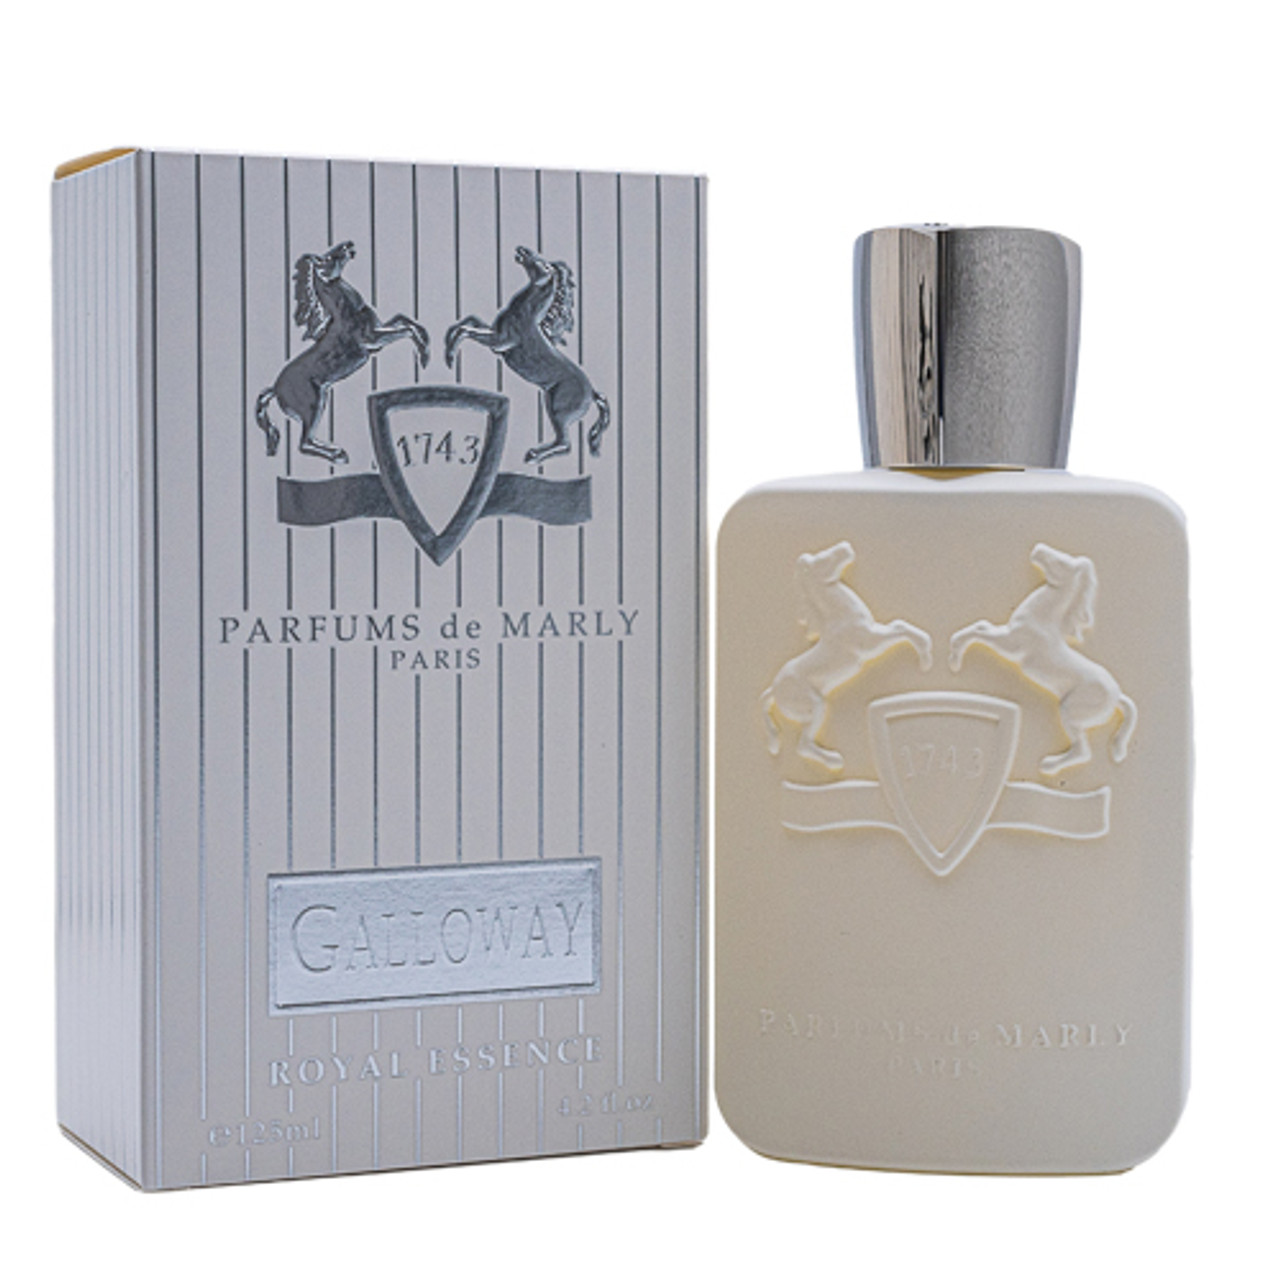 Валайя парфюм. Marly de Parfums Galloway EDP for him. Духи de Marly Percival. Galloway Парфюм. Parfums de Marly Percival sh/Gel 200ml.